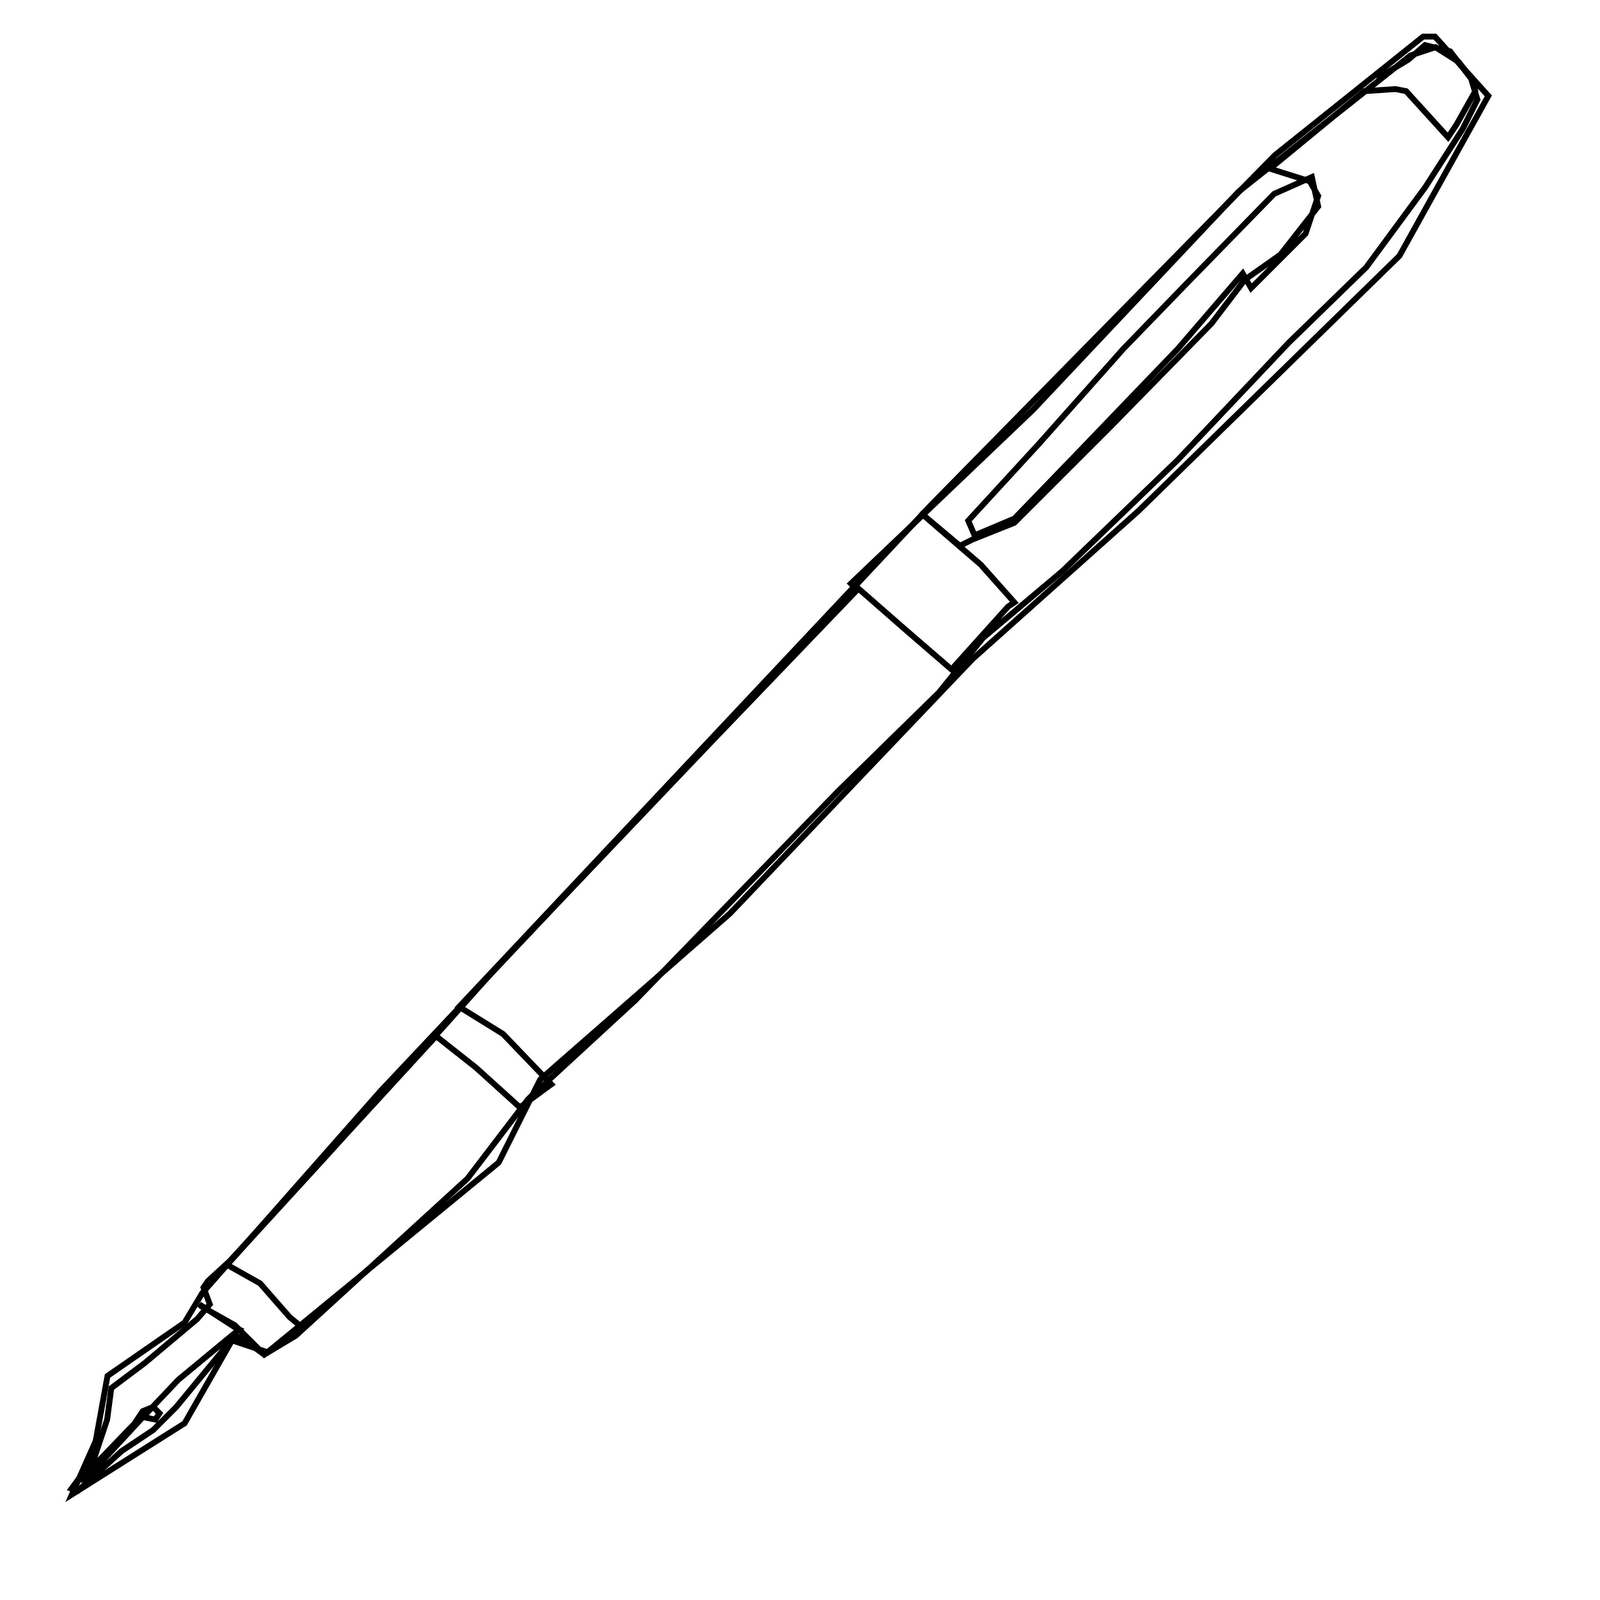 Free Pencil Clip Art Black And White, Download Free Pencil Clip Art